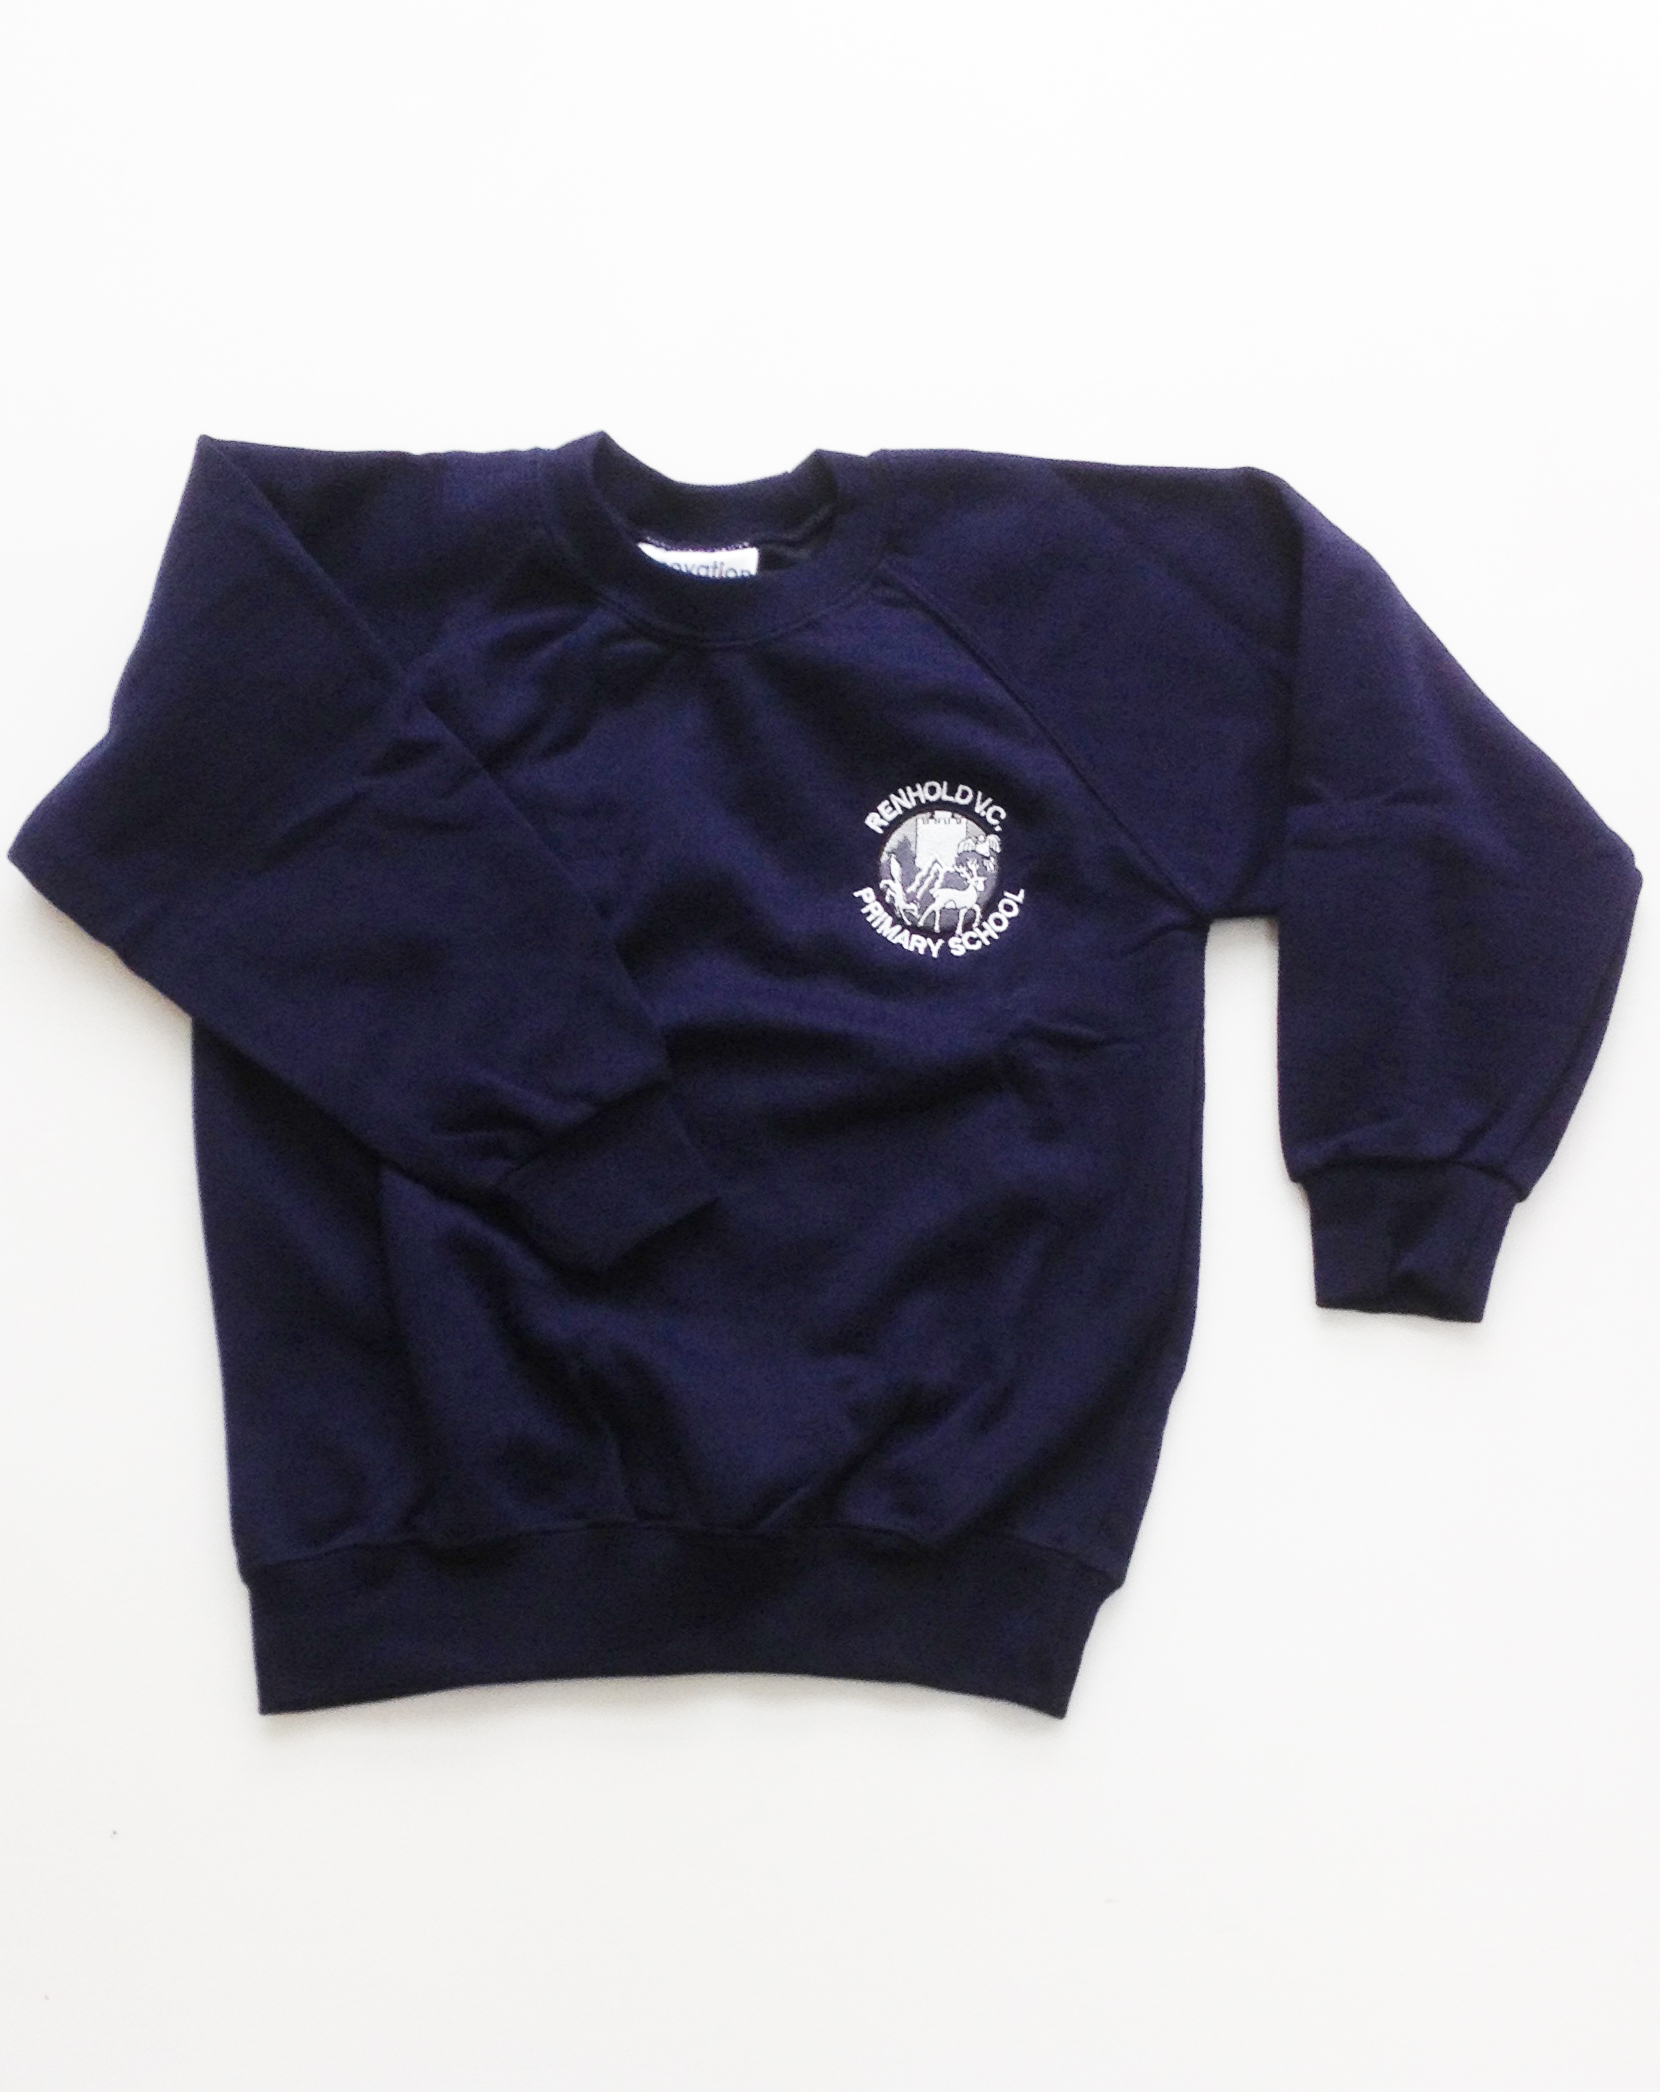 Renhold Primary Sweatshirt (Navy)